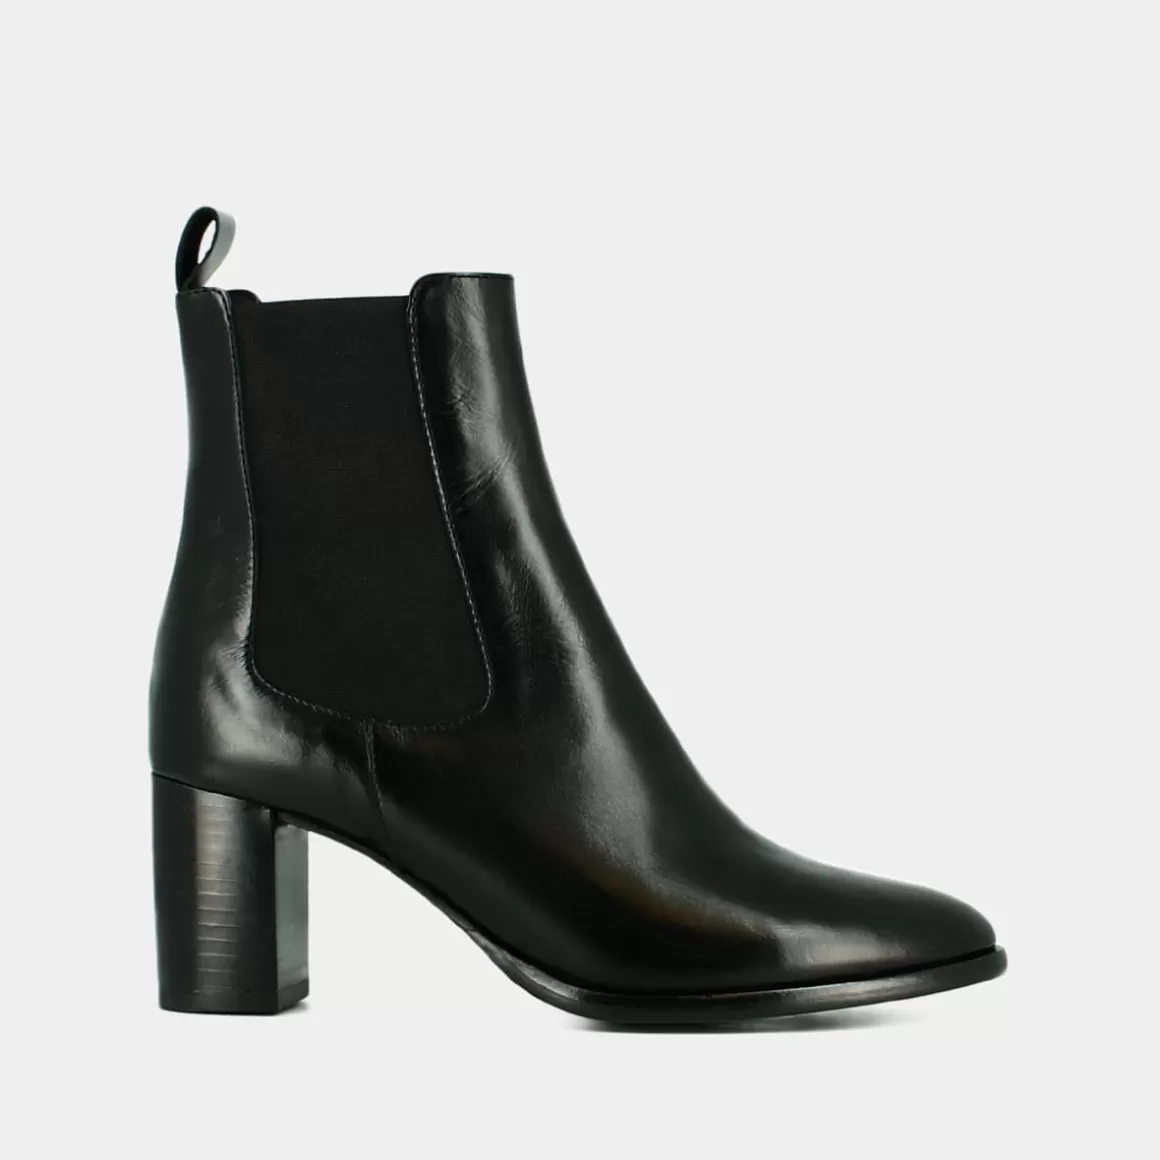 Boots with heels and elastics<Jonak New